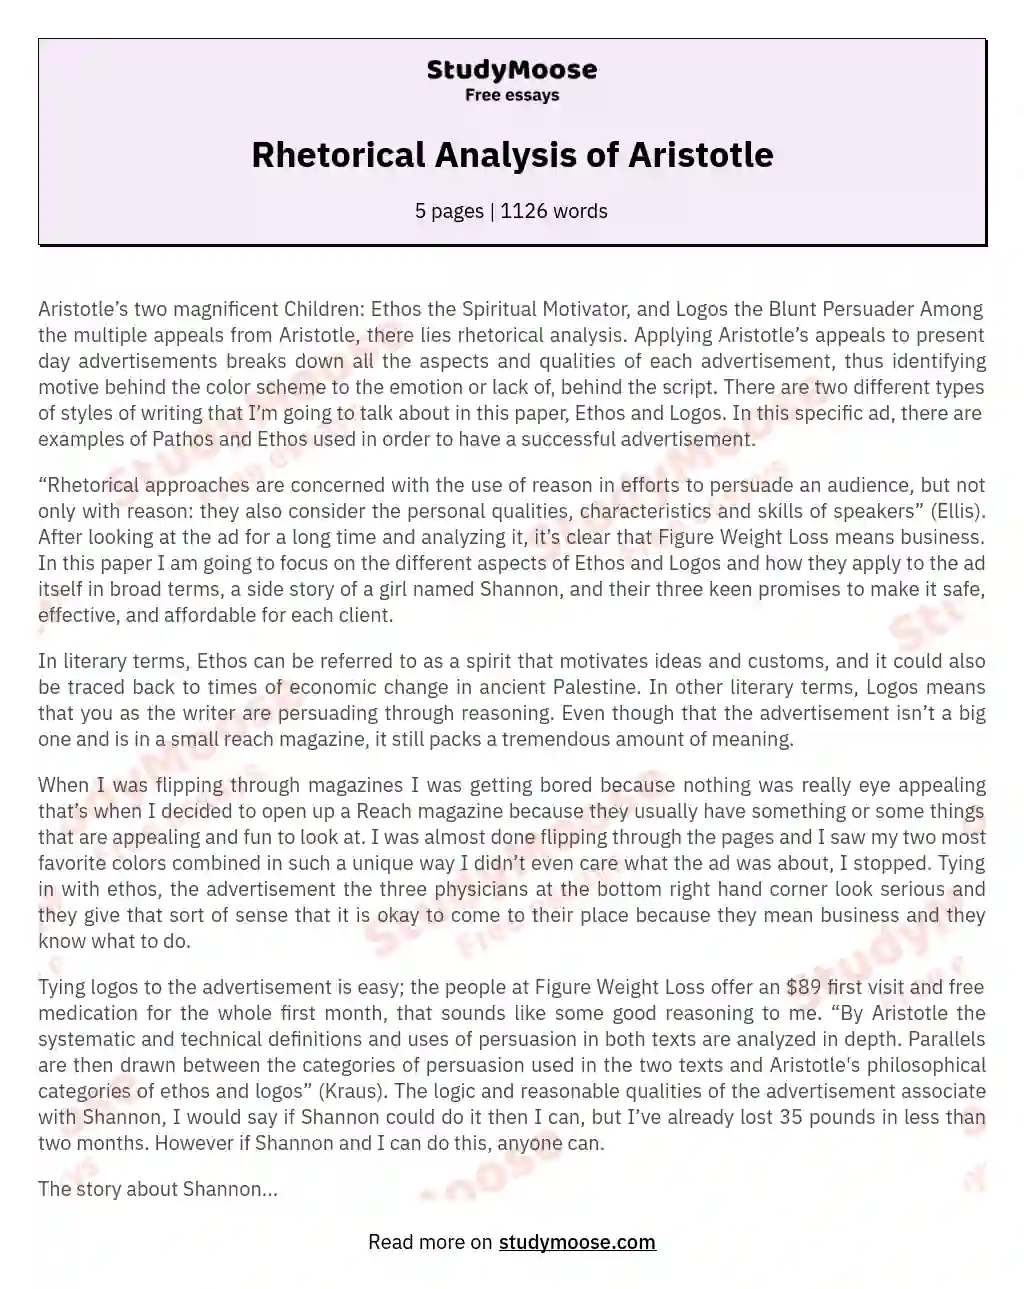 Rhetorical Analysis of Aristotle essay